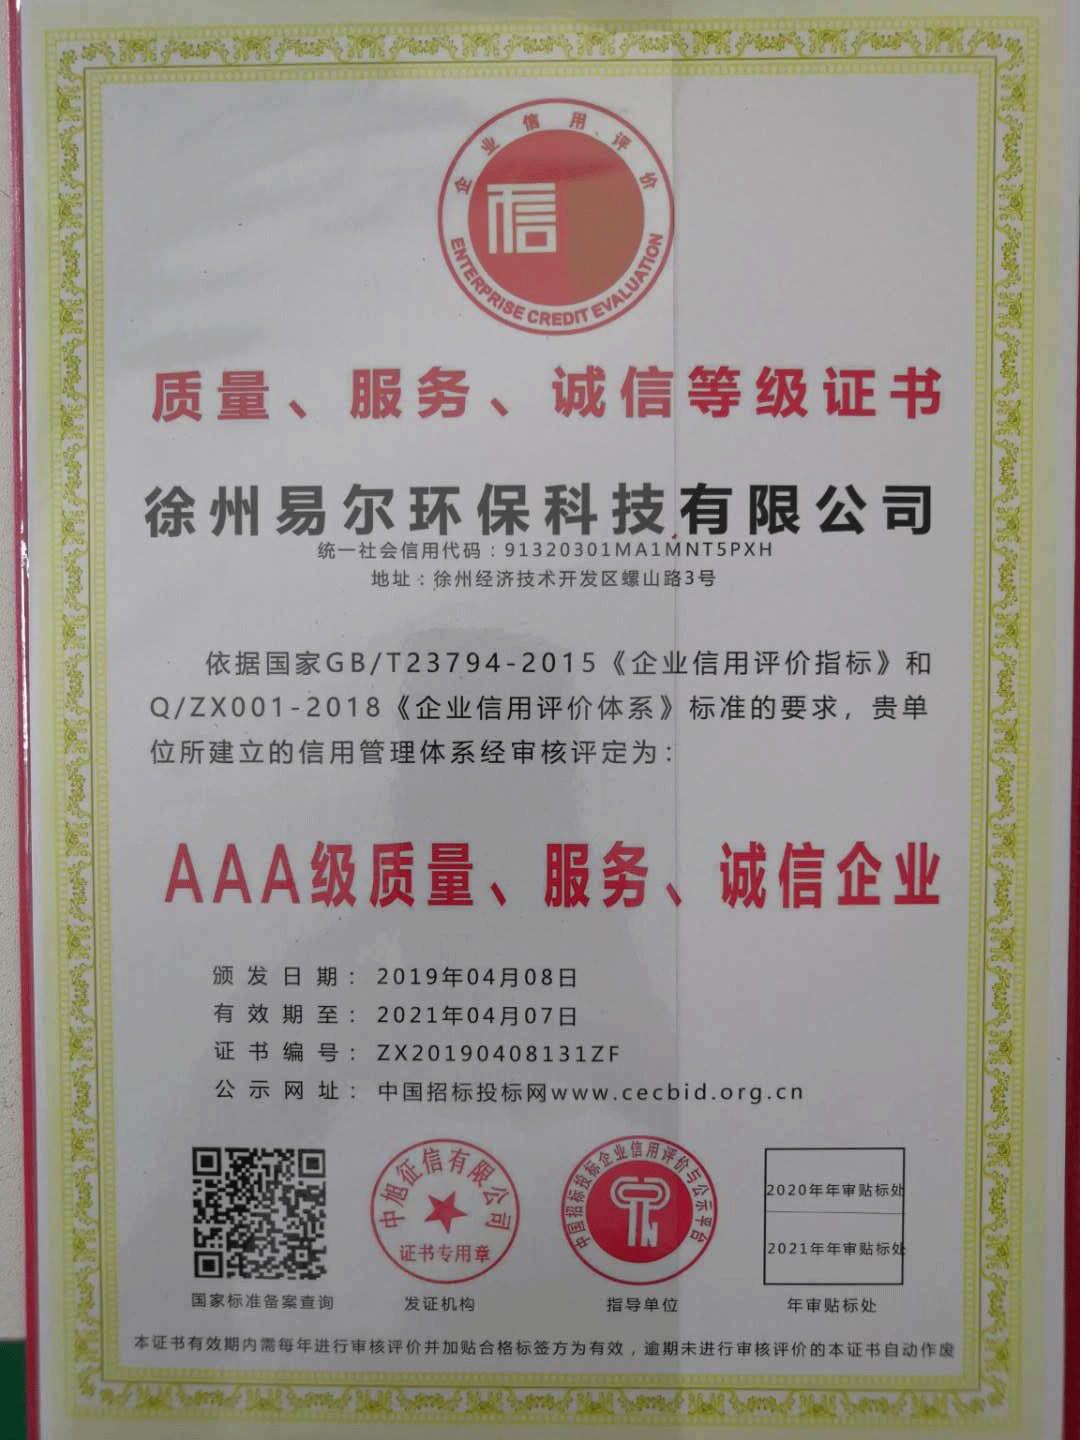 AAA级质量、服务、诚信企业证书.png